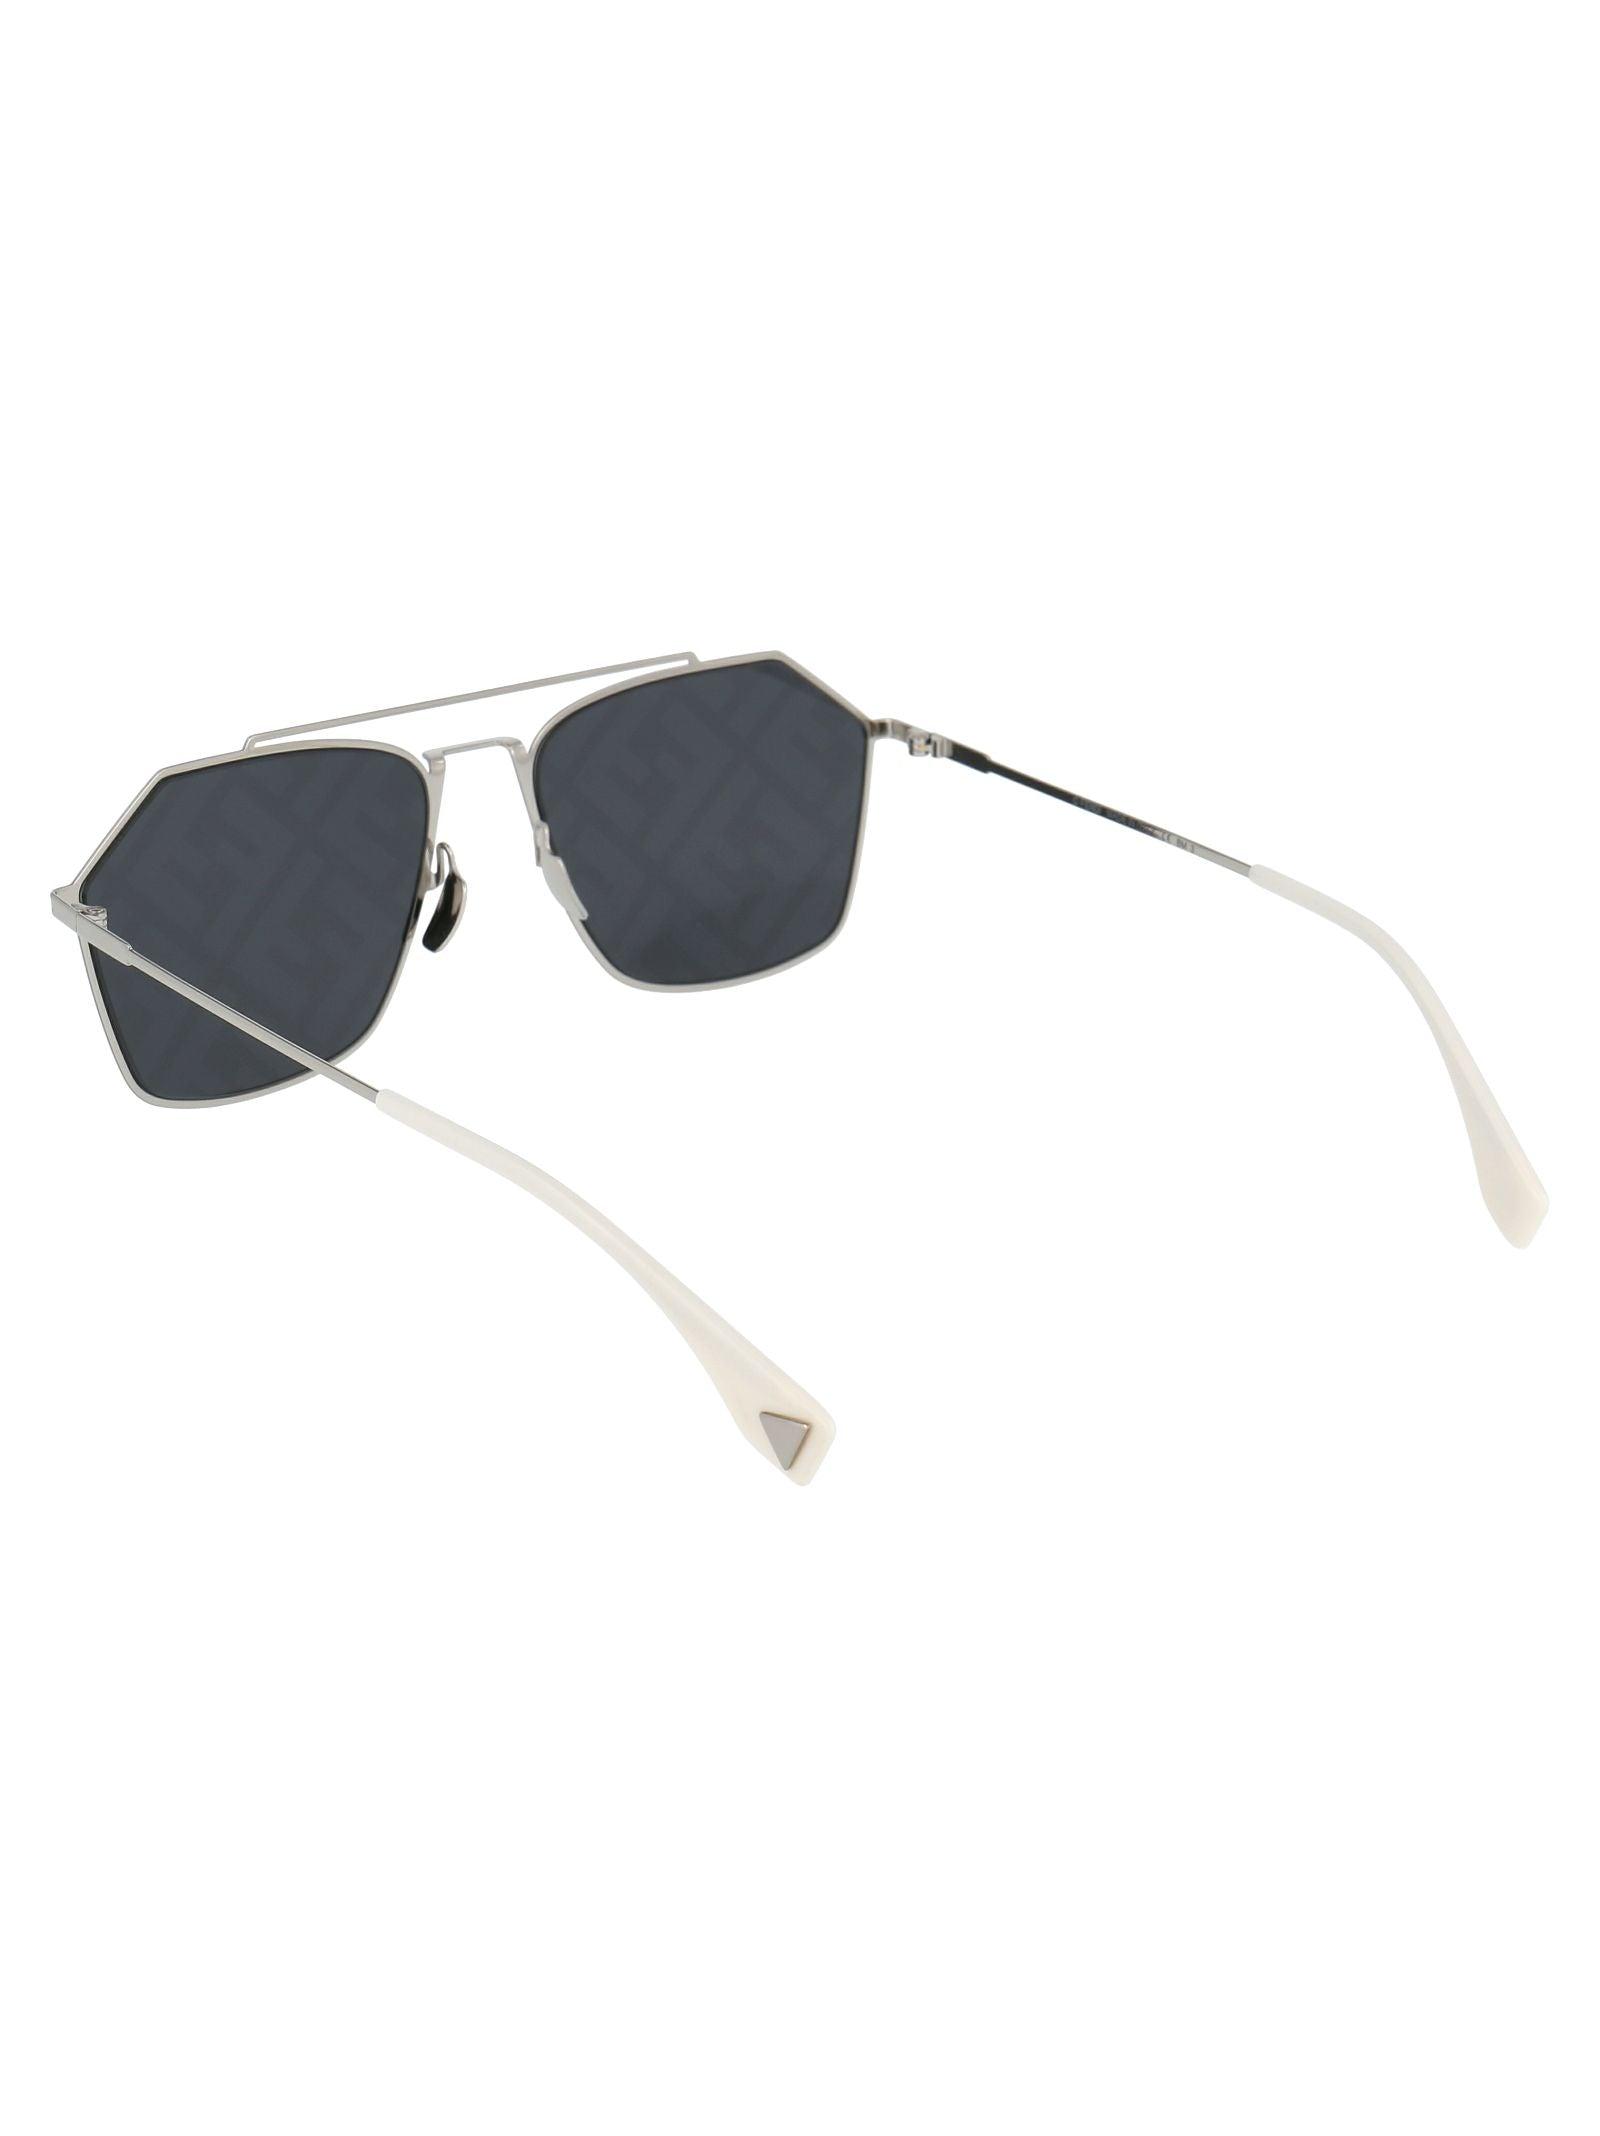 Fendi Metal Sunglasses for Men - Save 29% | Lyst